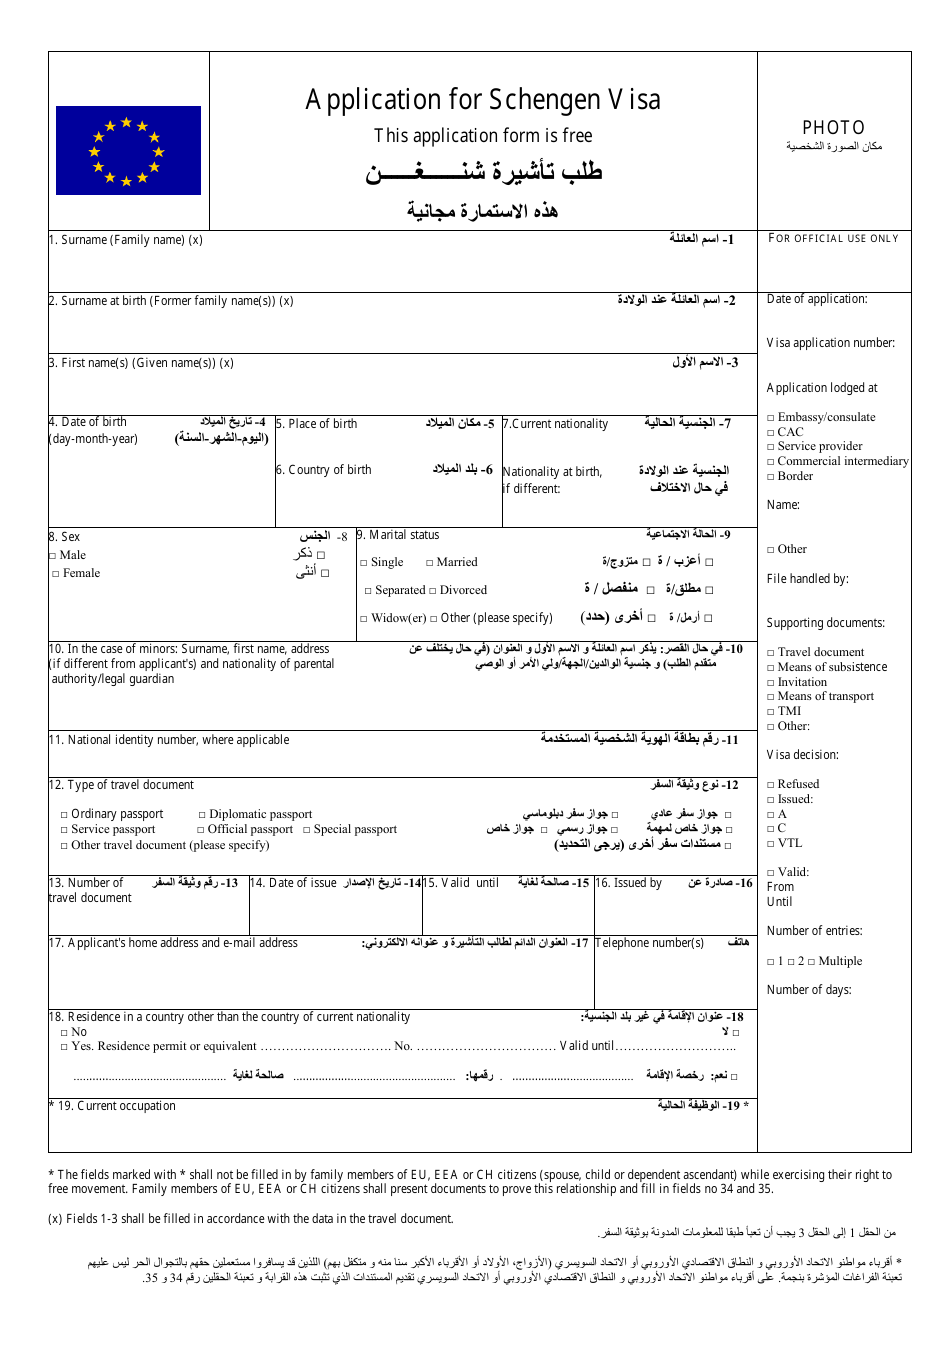 switzerland tourist visa application form pdf